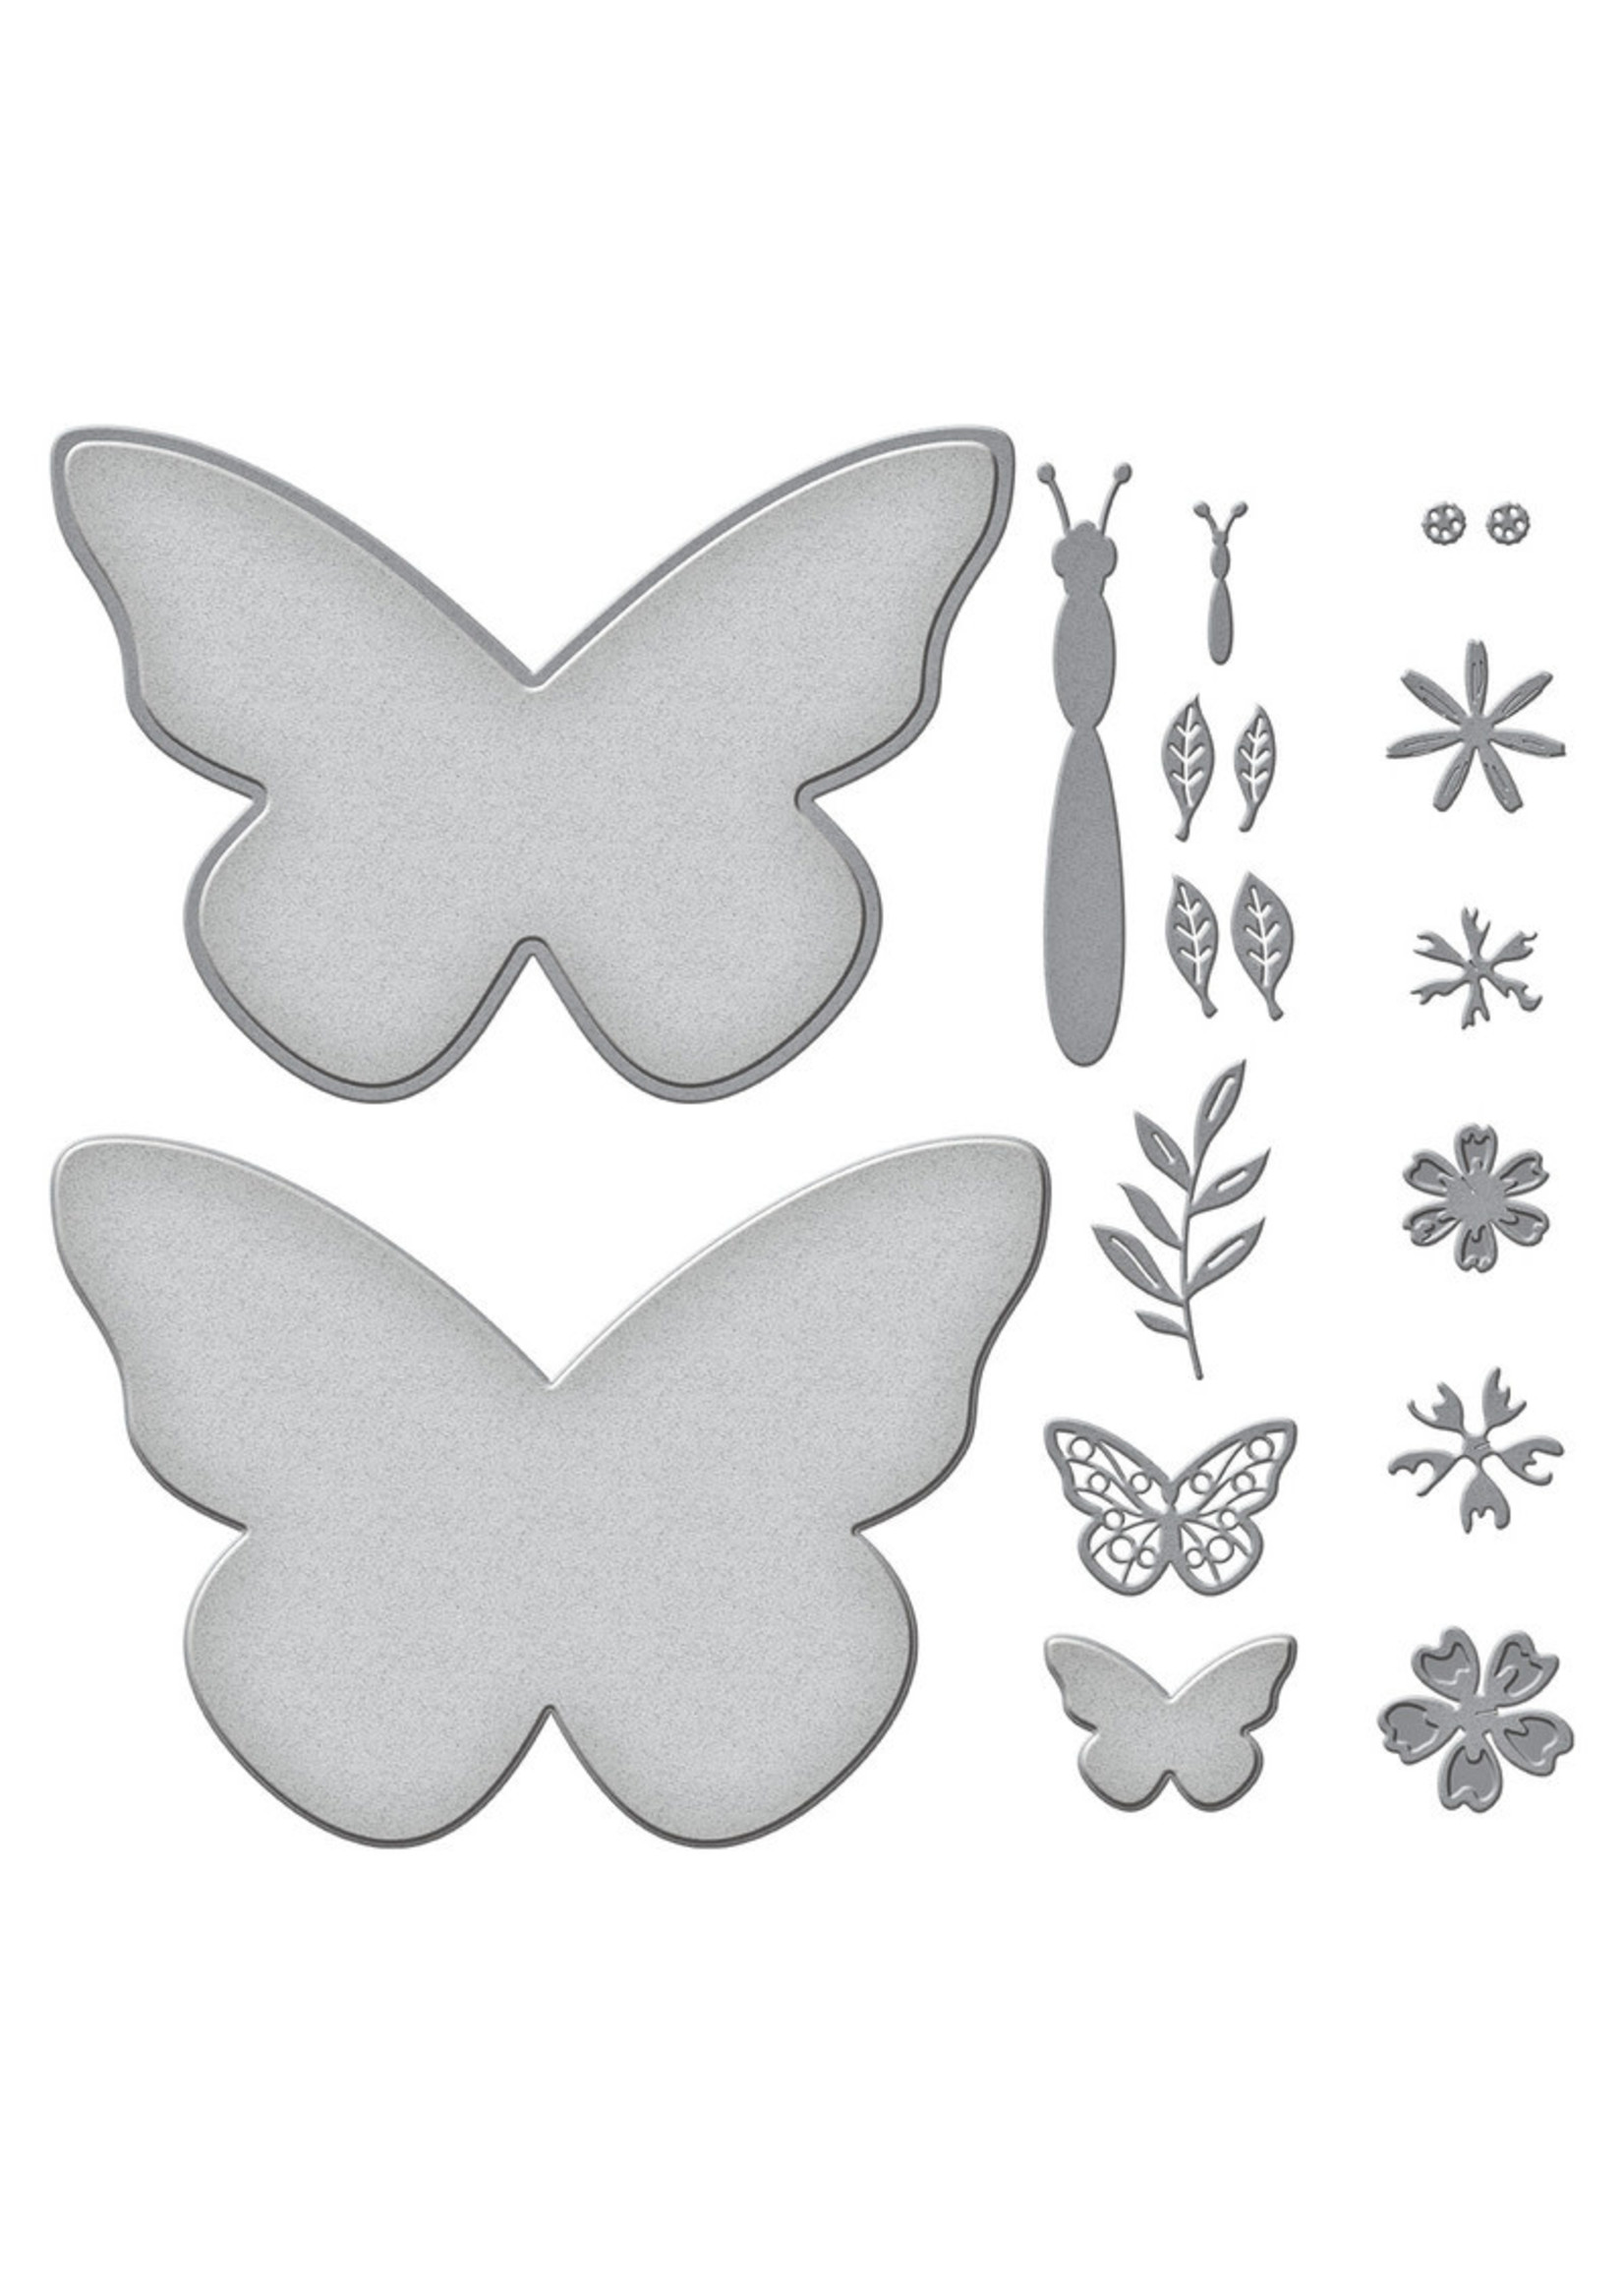 SPELLBINDERS PAPERCRAFTS, INC Butterfly Card Creator Dies